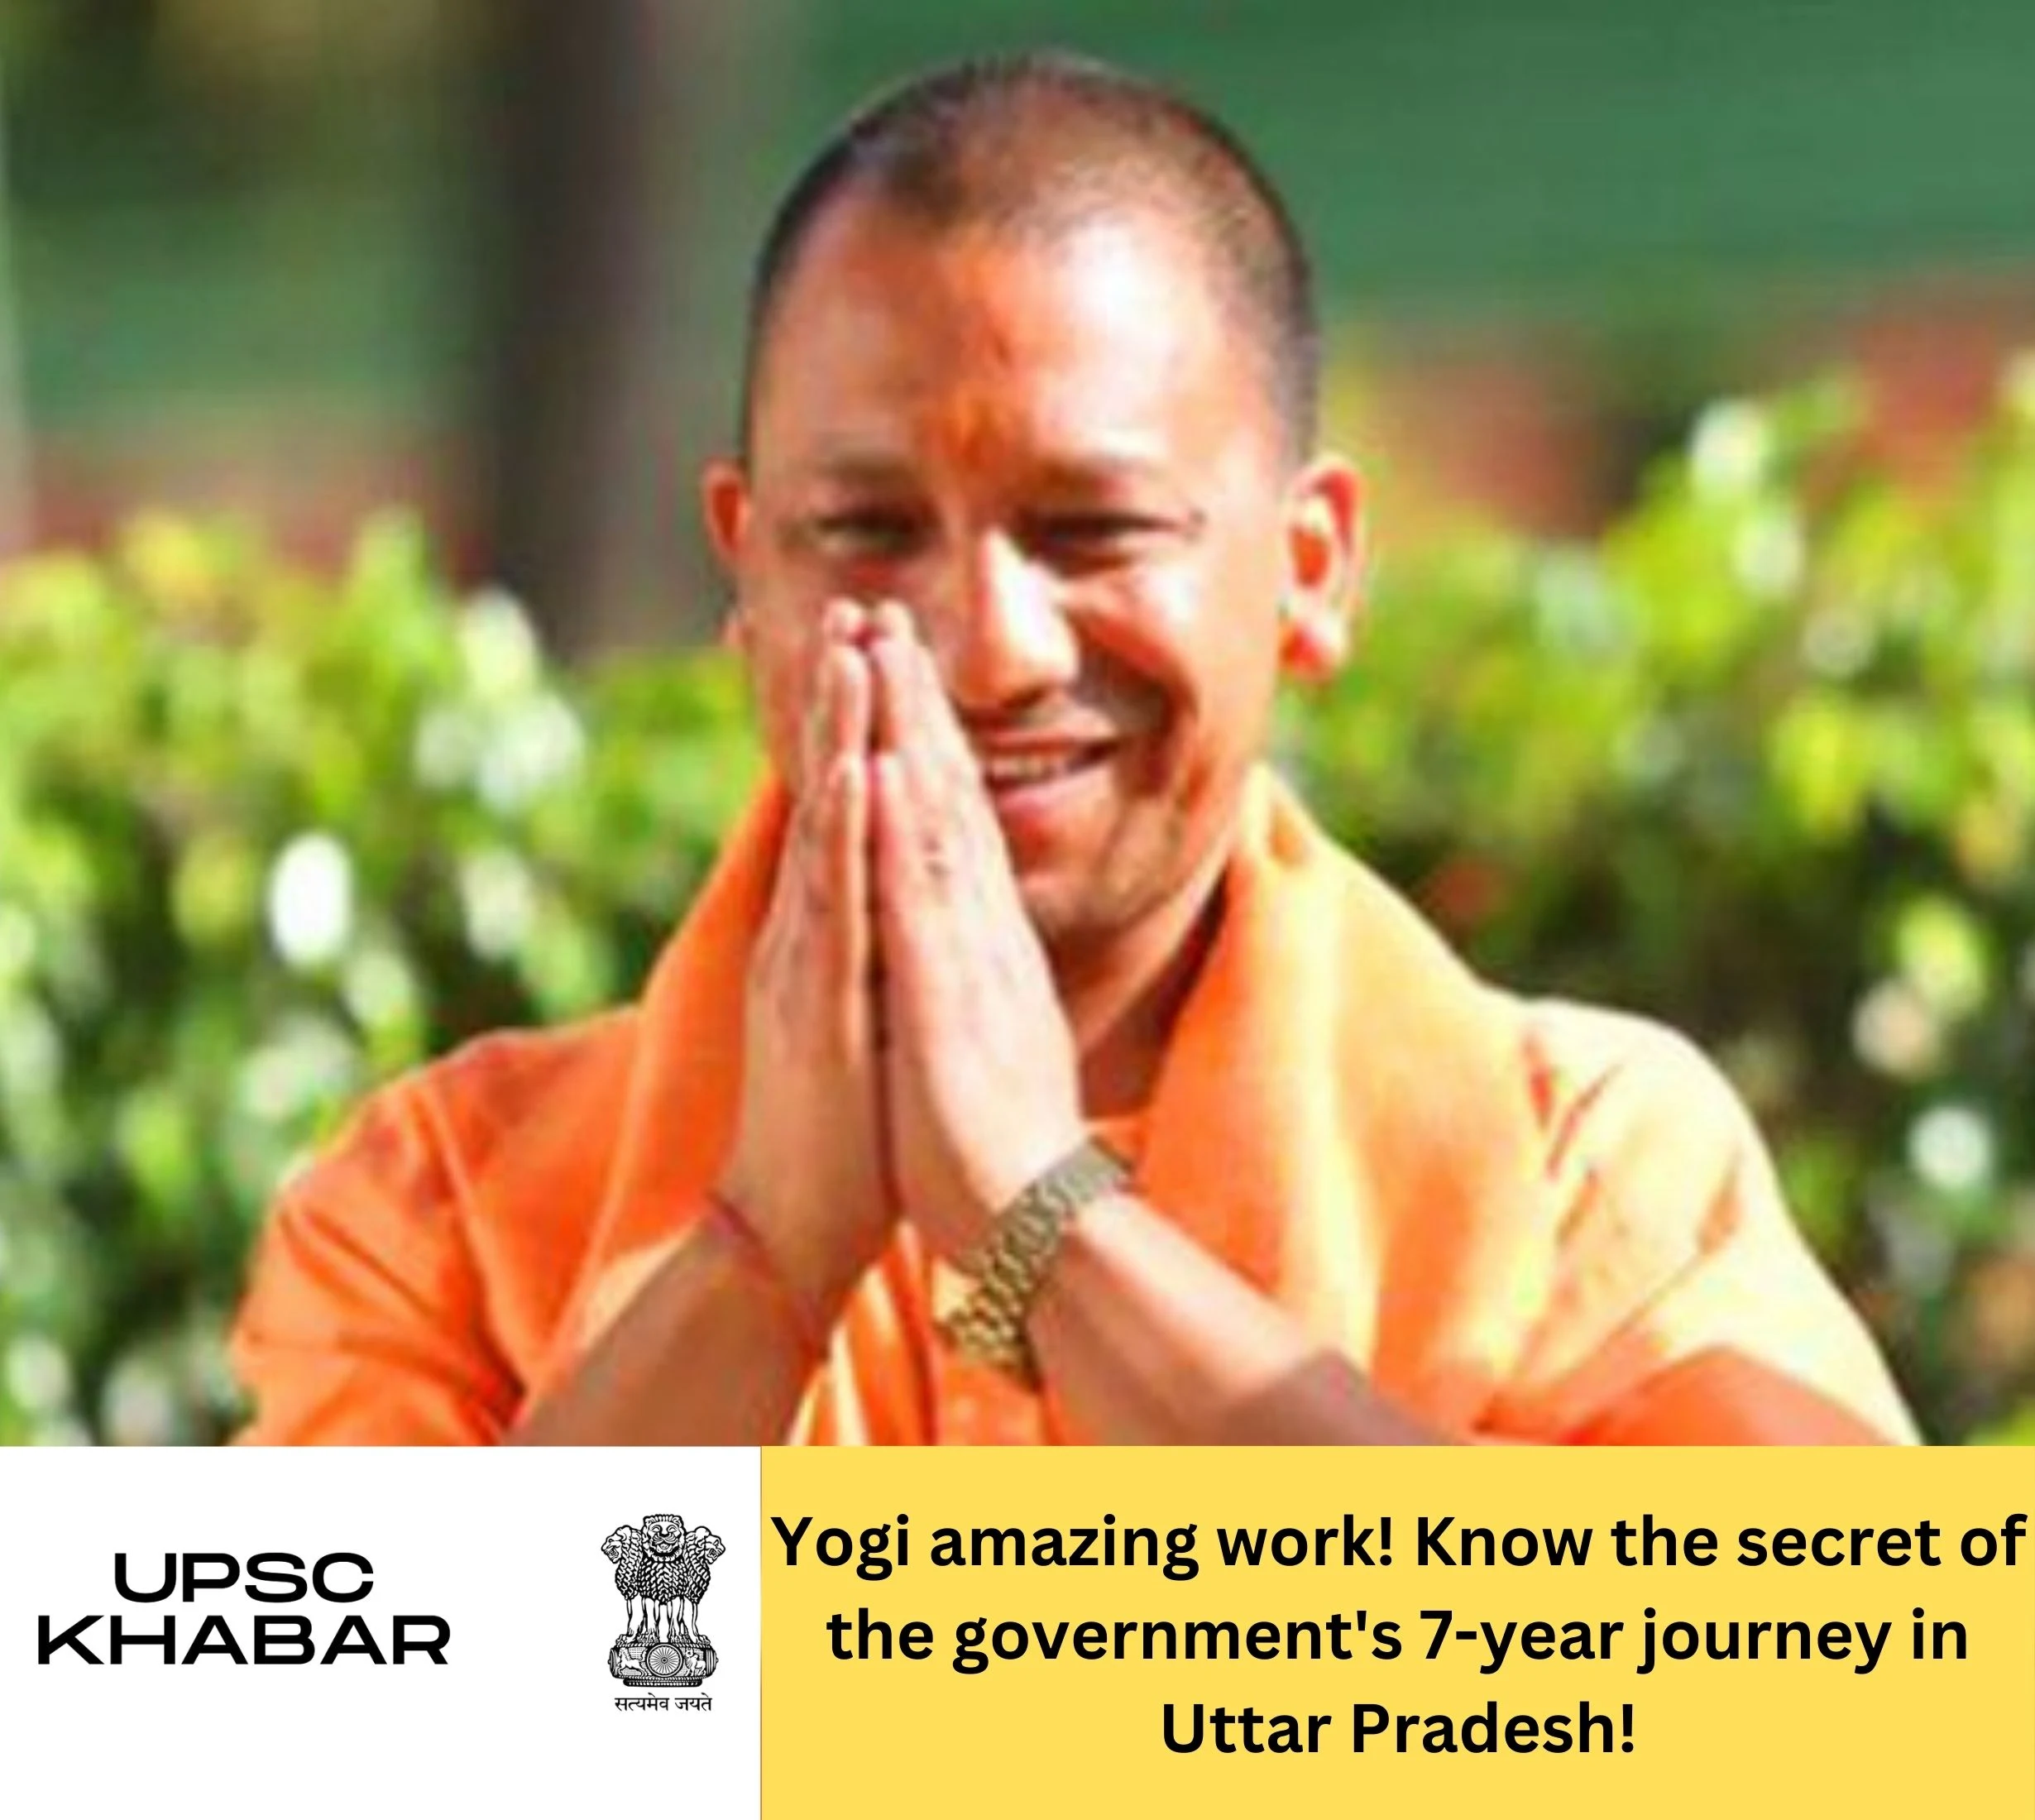 Yogi amazing work! Know the secret of the government's 7-year journey in Uttar Pradesh!